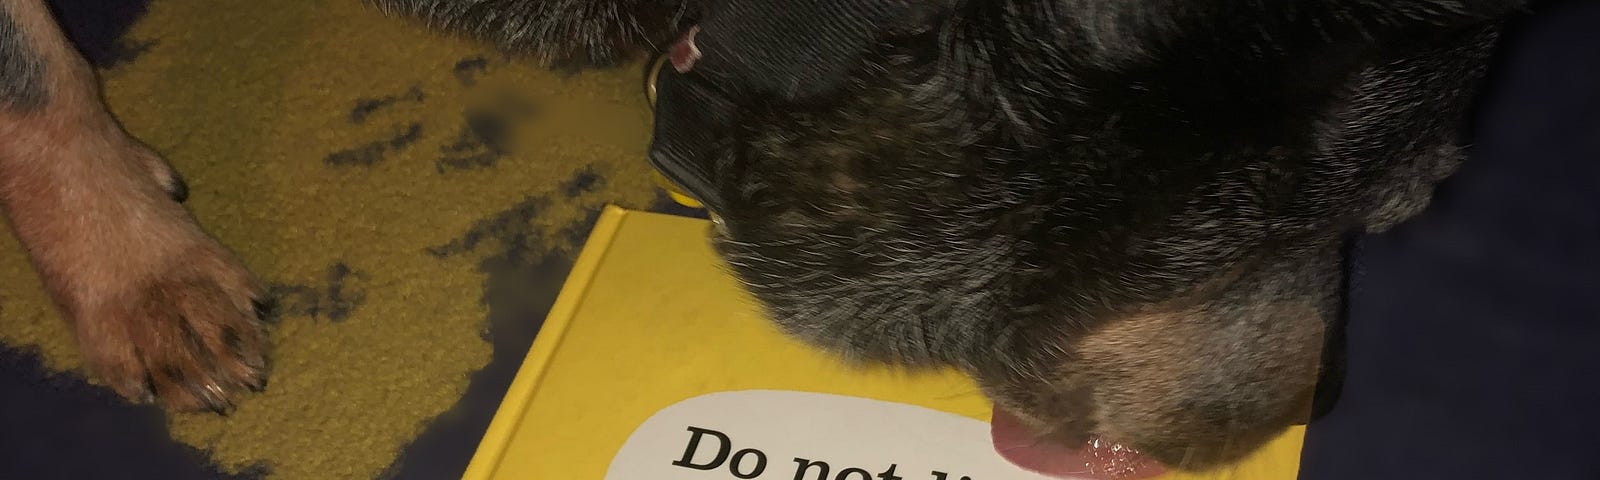 Blue Heeler licking a book titled “Do Not Lick This Book”